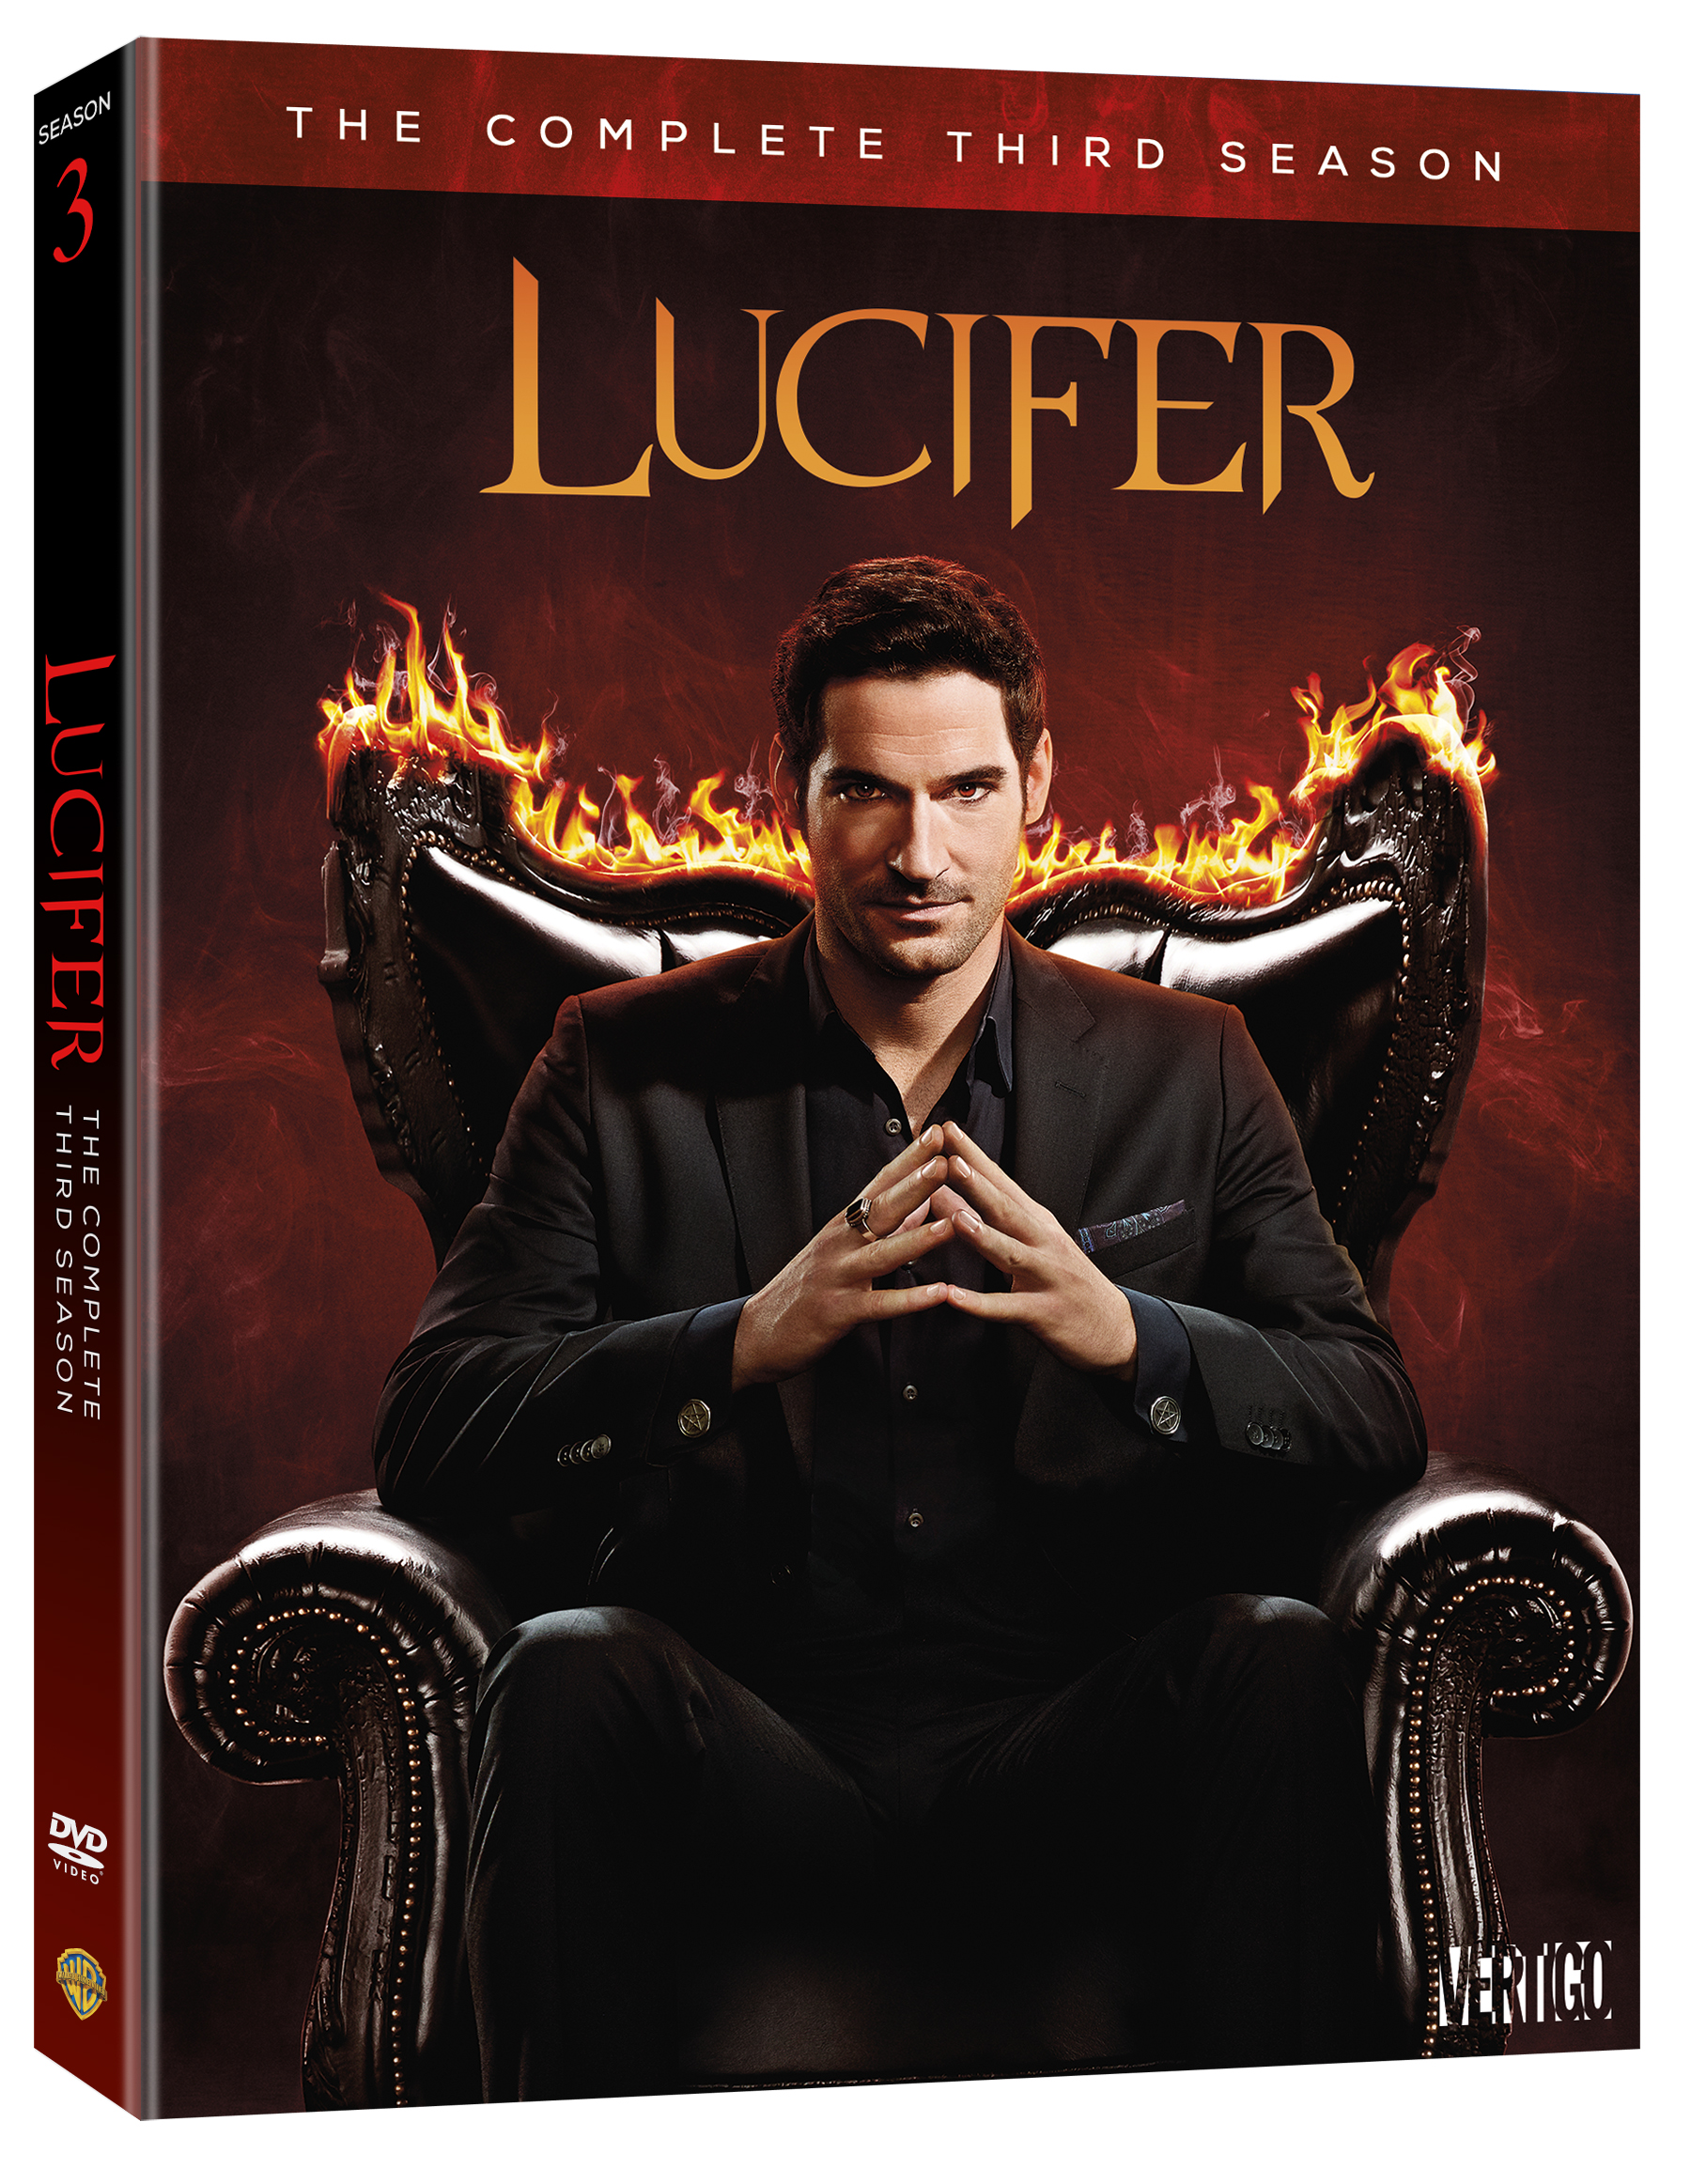 Lucifer season 3 DVD Warner Bros